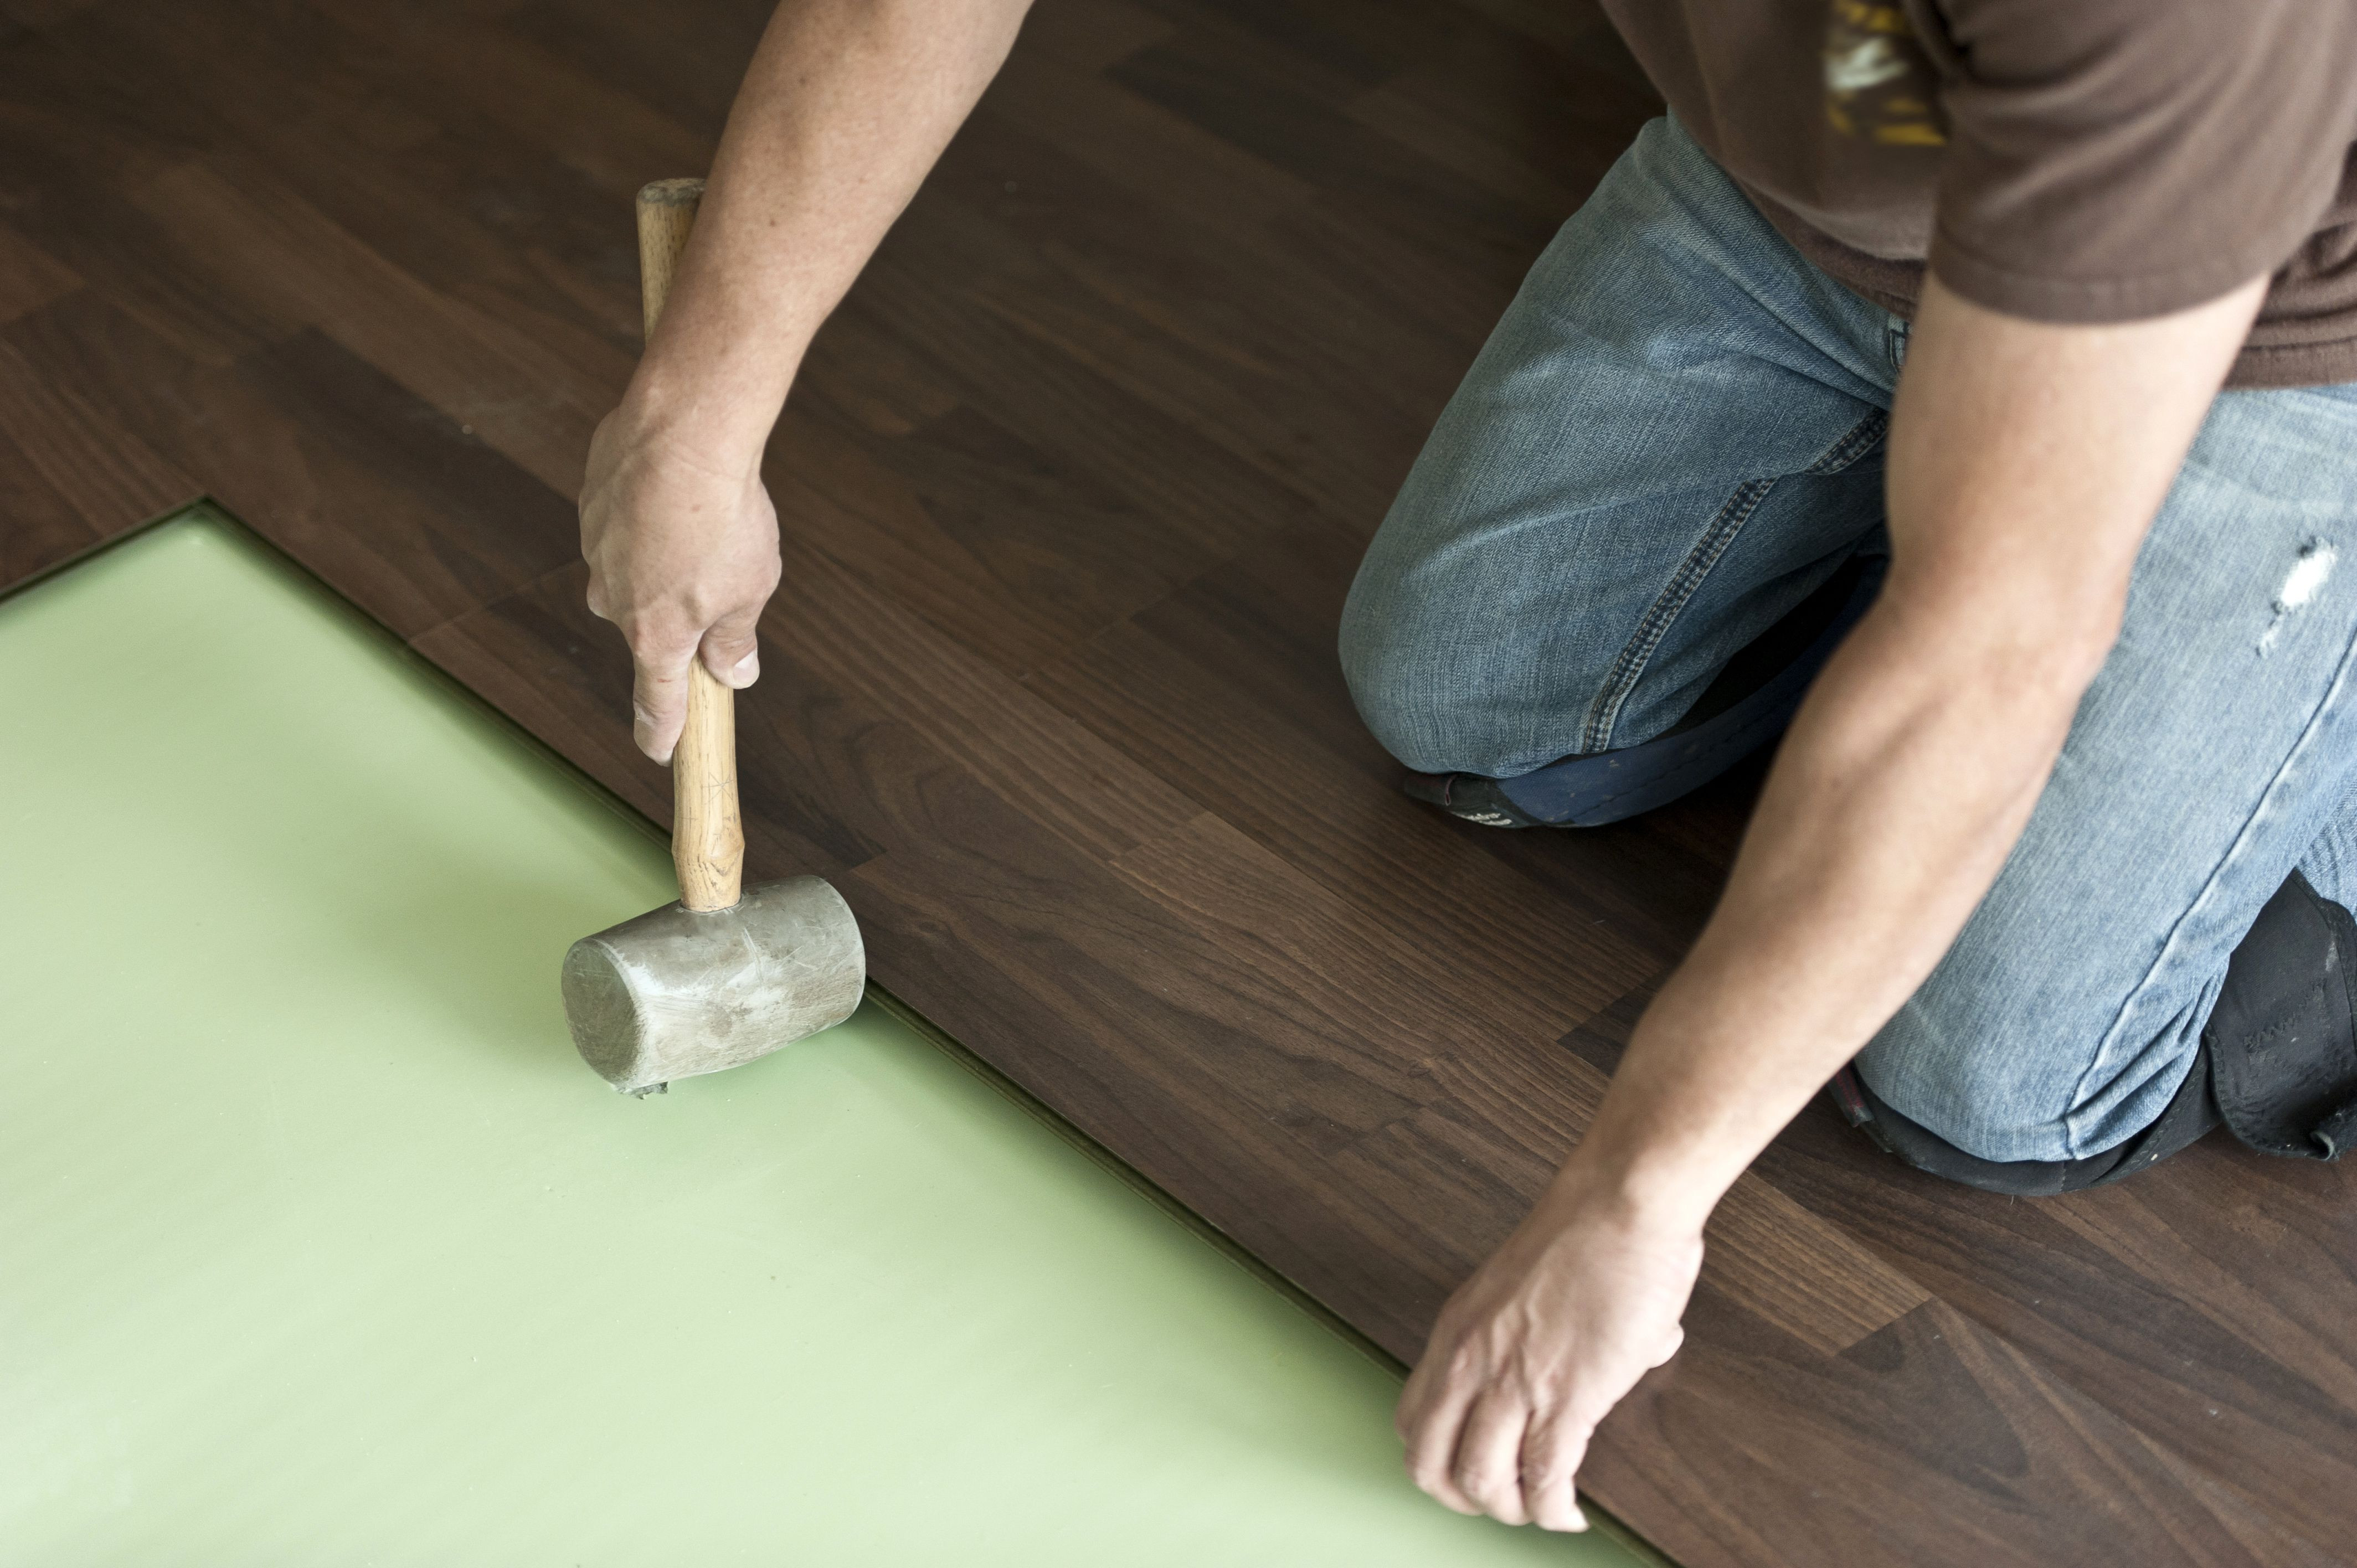 Glue Nail or Float Hardwood Floor Of Can A Foam Pad Be Use Under solid Hardwood Flooring Inside Installing Hardwood Floor 155149312 57e967d45f9b586c35ade84a